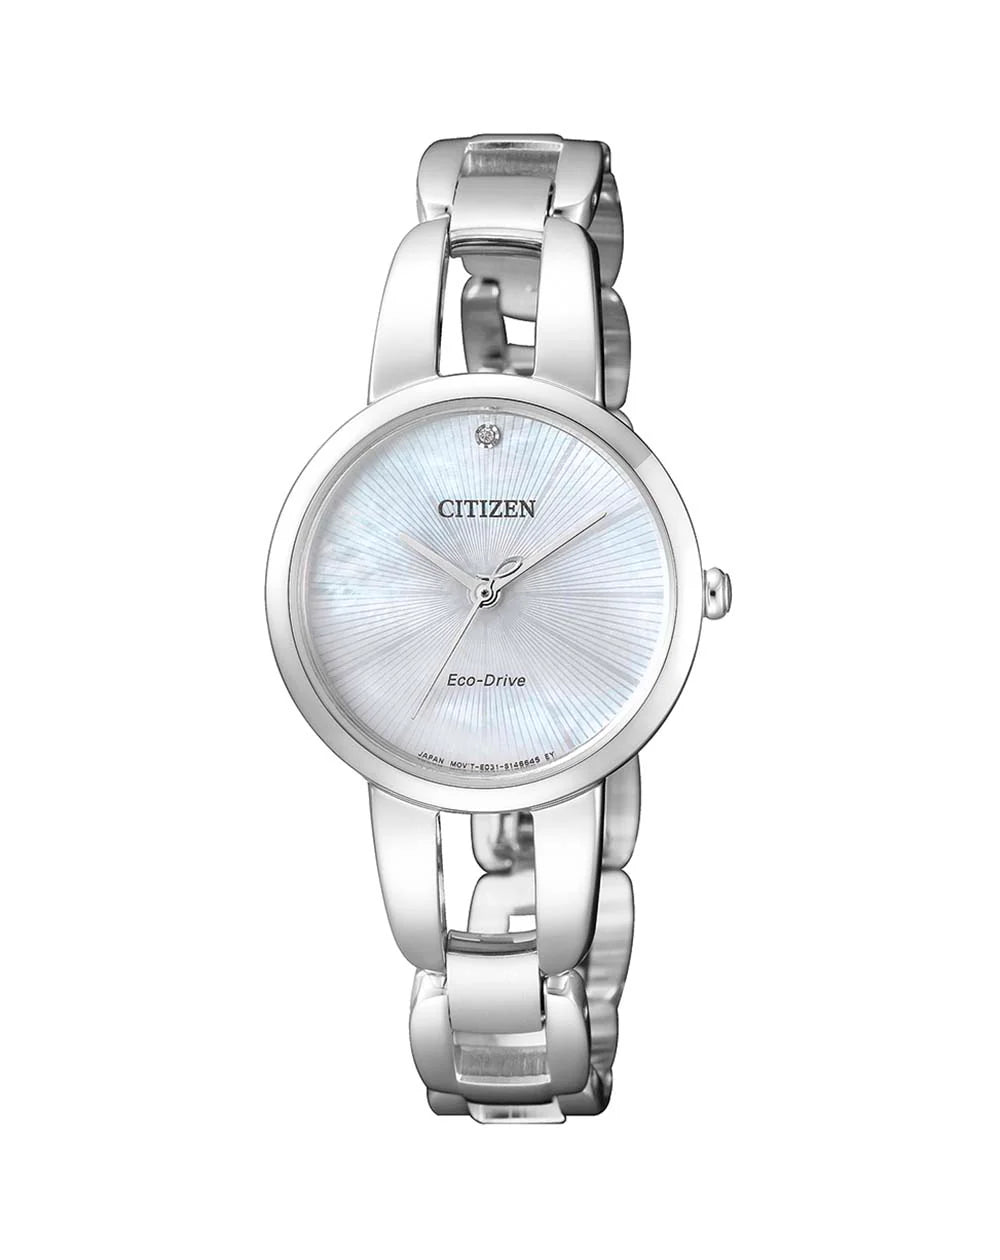 Citizen Women's Eco-Drive Diamond watch